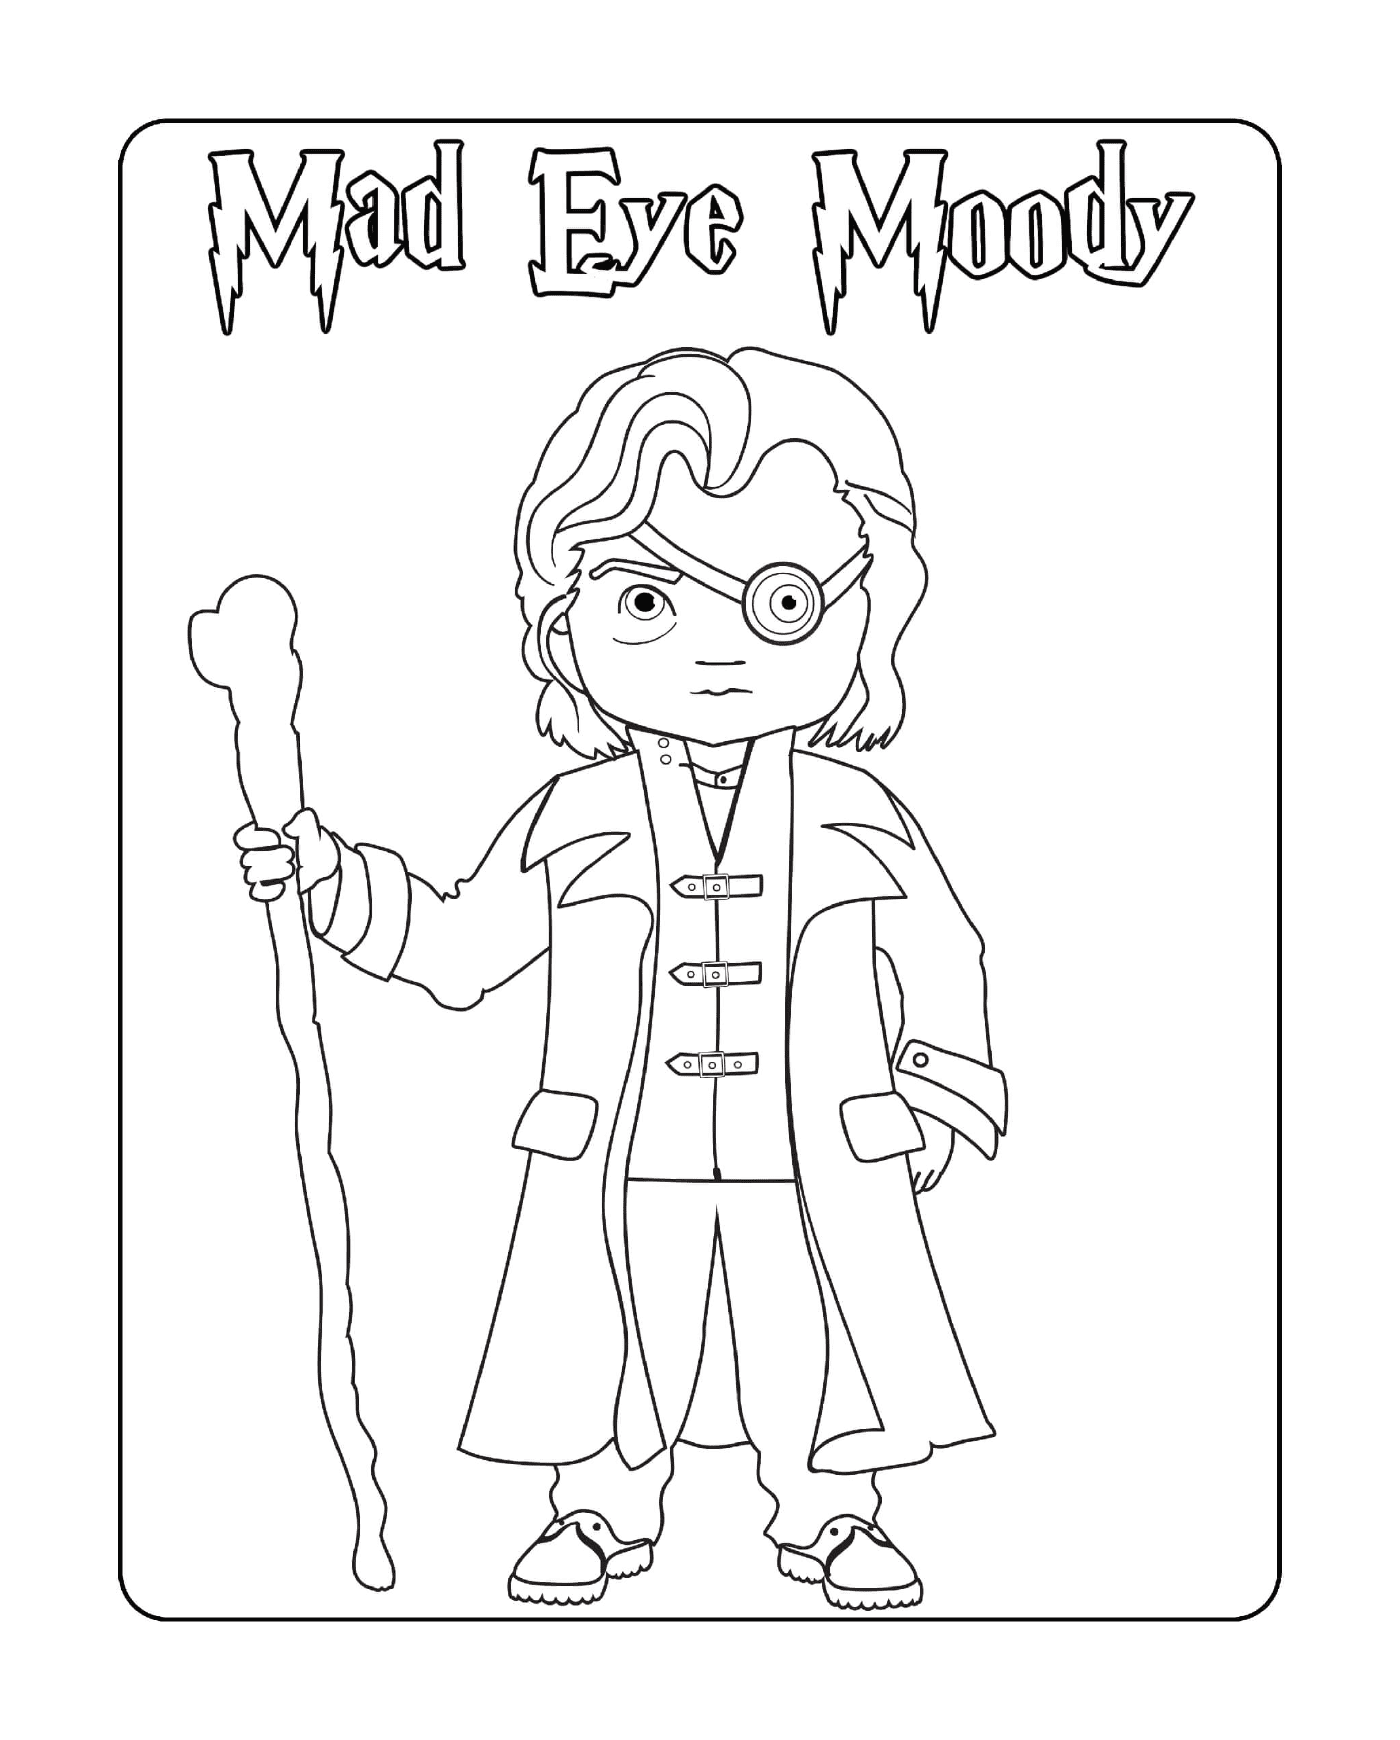 Mad Eye Moody